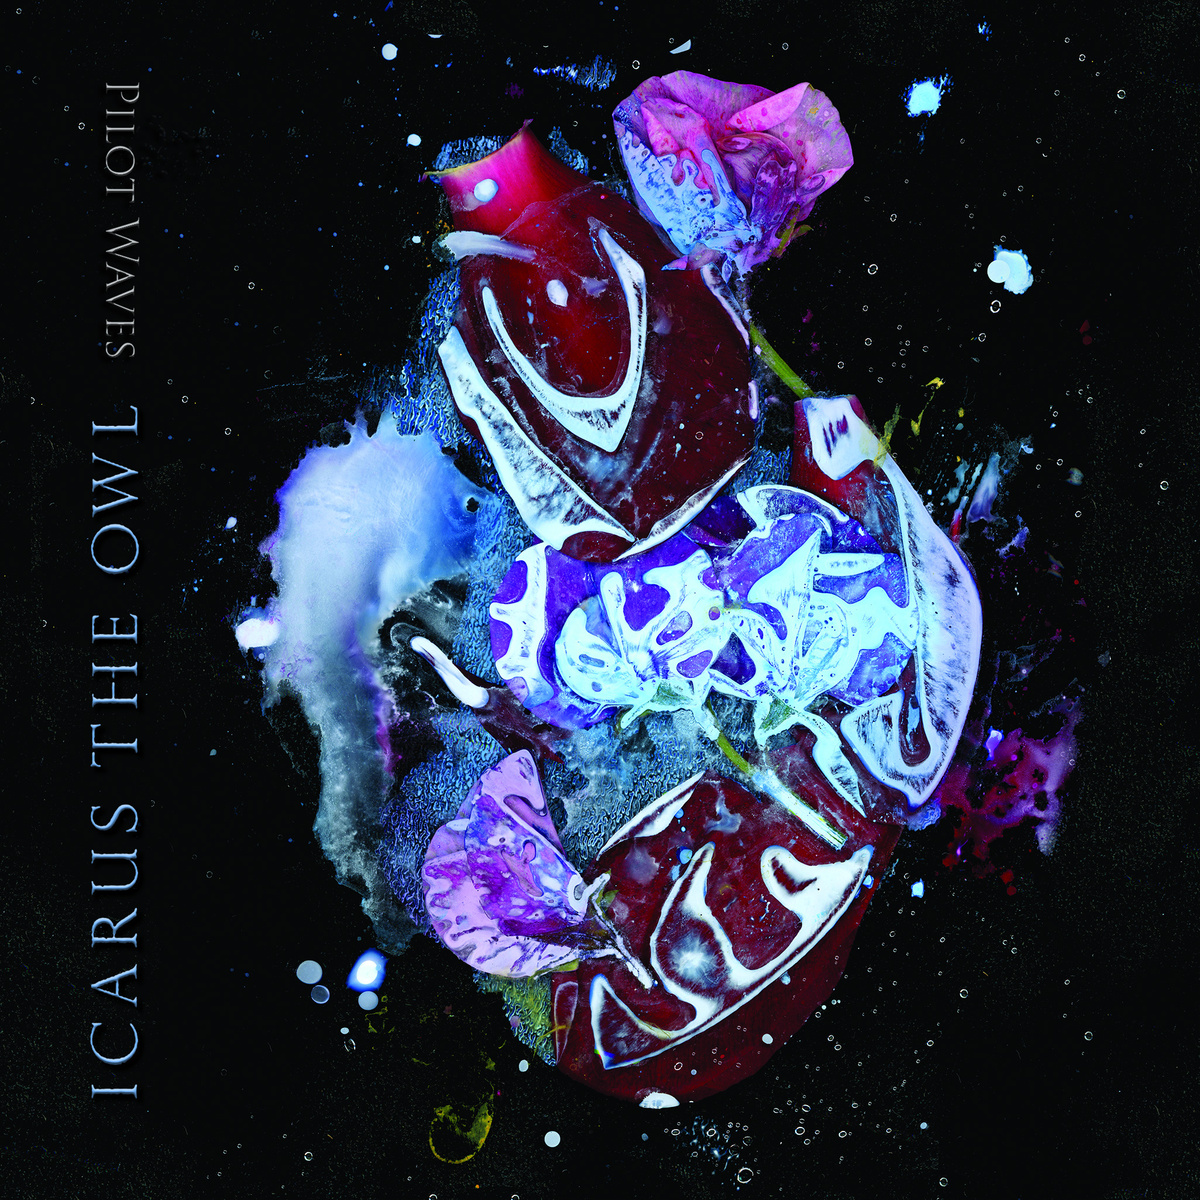 Icarus the Owl - Pilot Waves (2015) Album Info